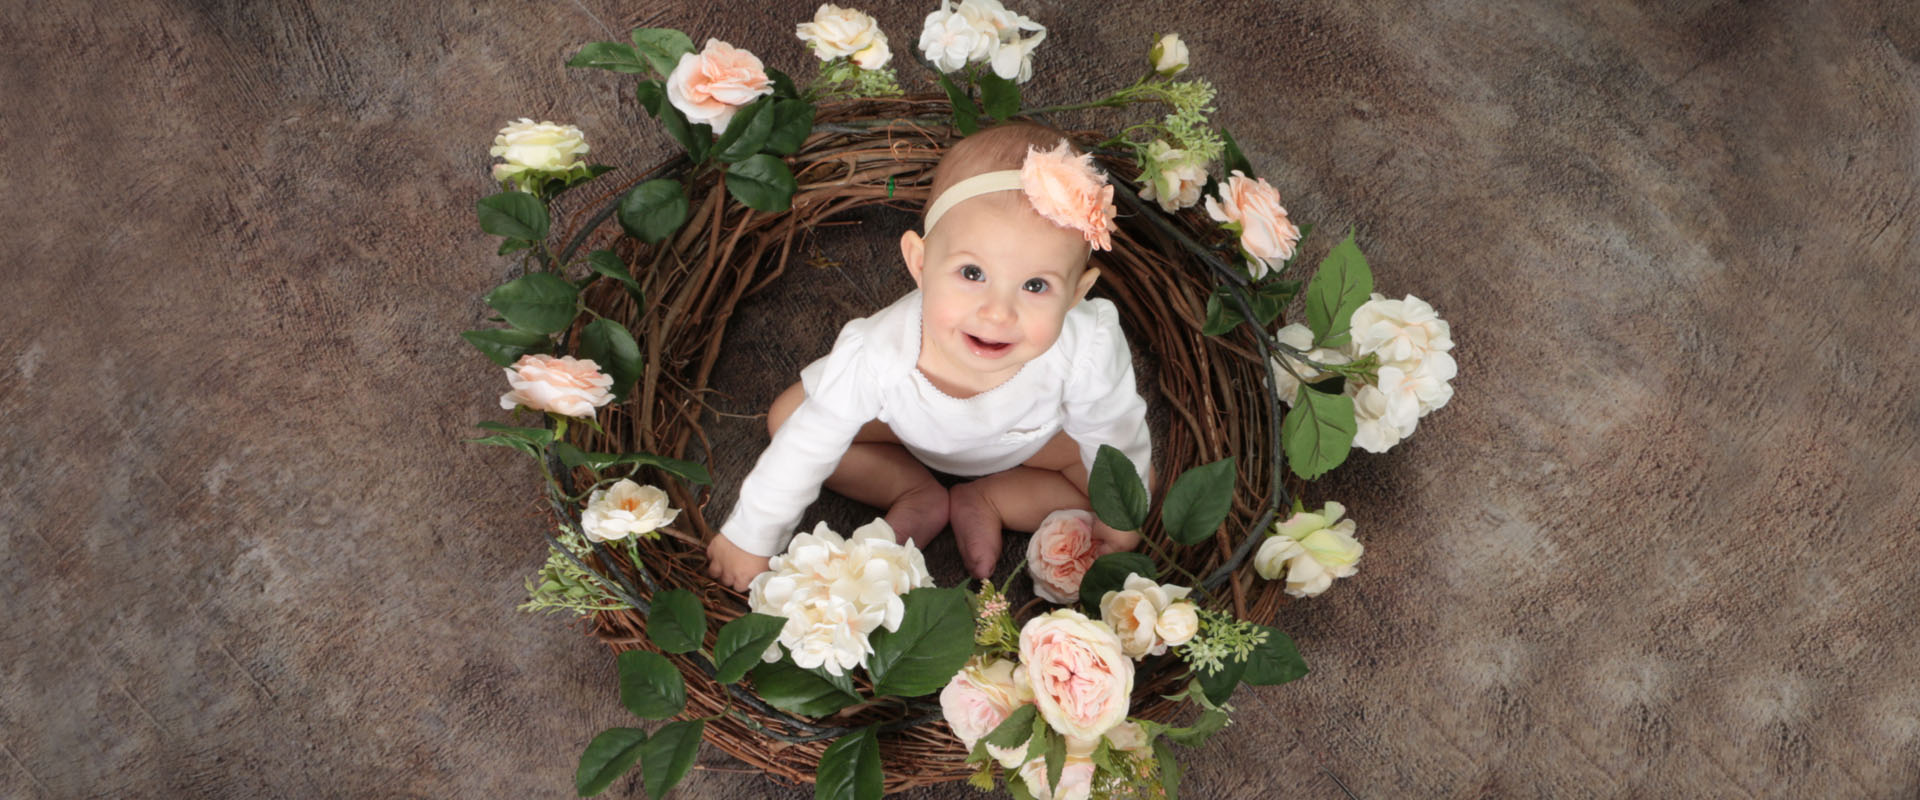 Baby girl Spring portrait with flower garland